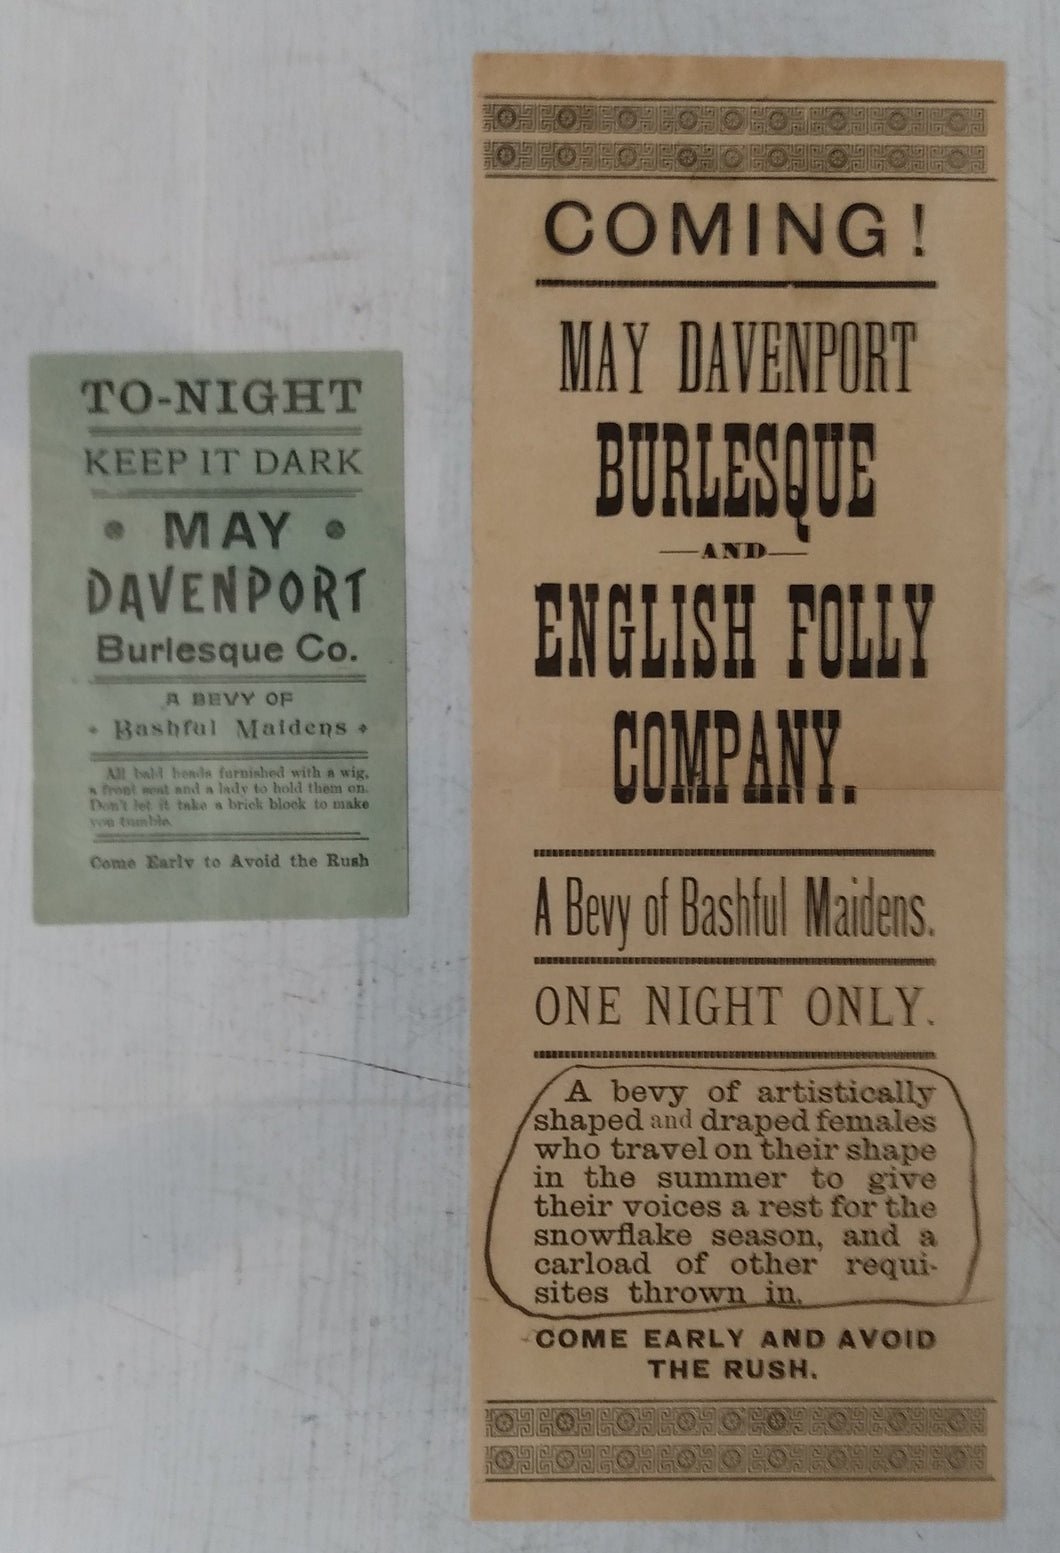 Two May Davenport Burlesque Company flyers